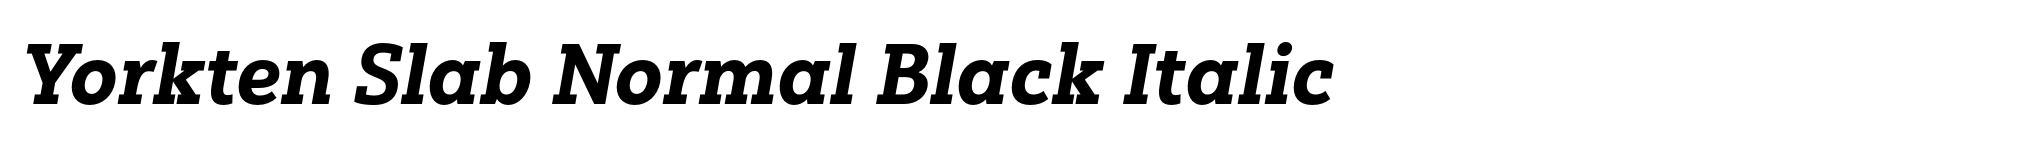 Yorkten Slab Normal Black Italic image